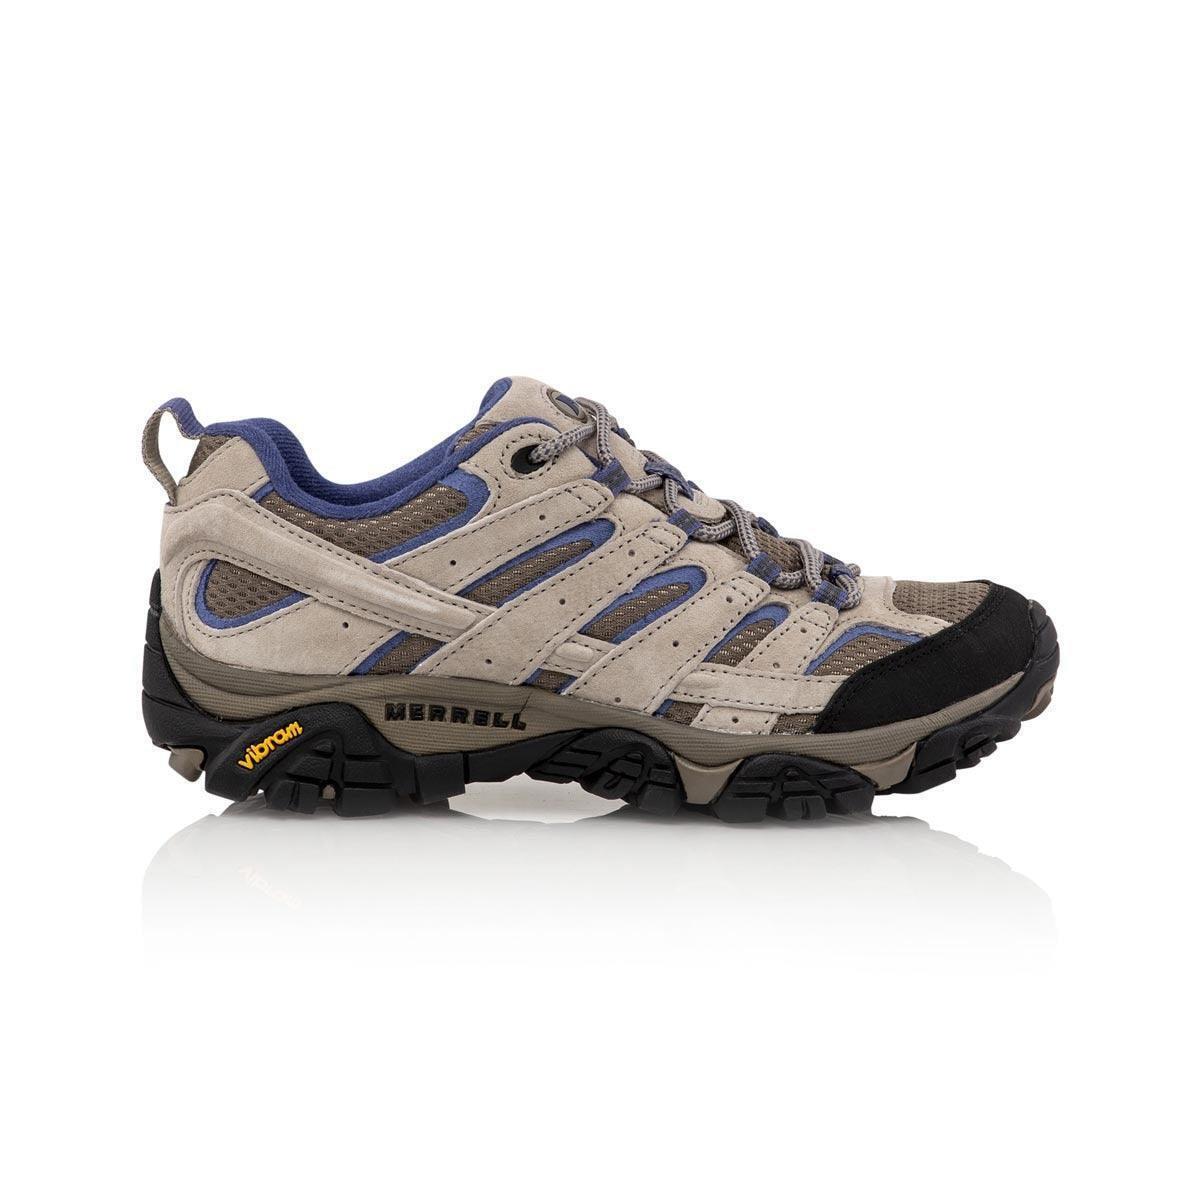 Merrell - Moab 2 Ventilator Hiking Shoes - Womens US 7.5 / Standard - Aluminum/Marlin